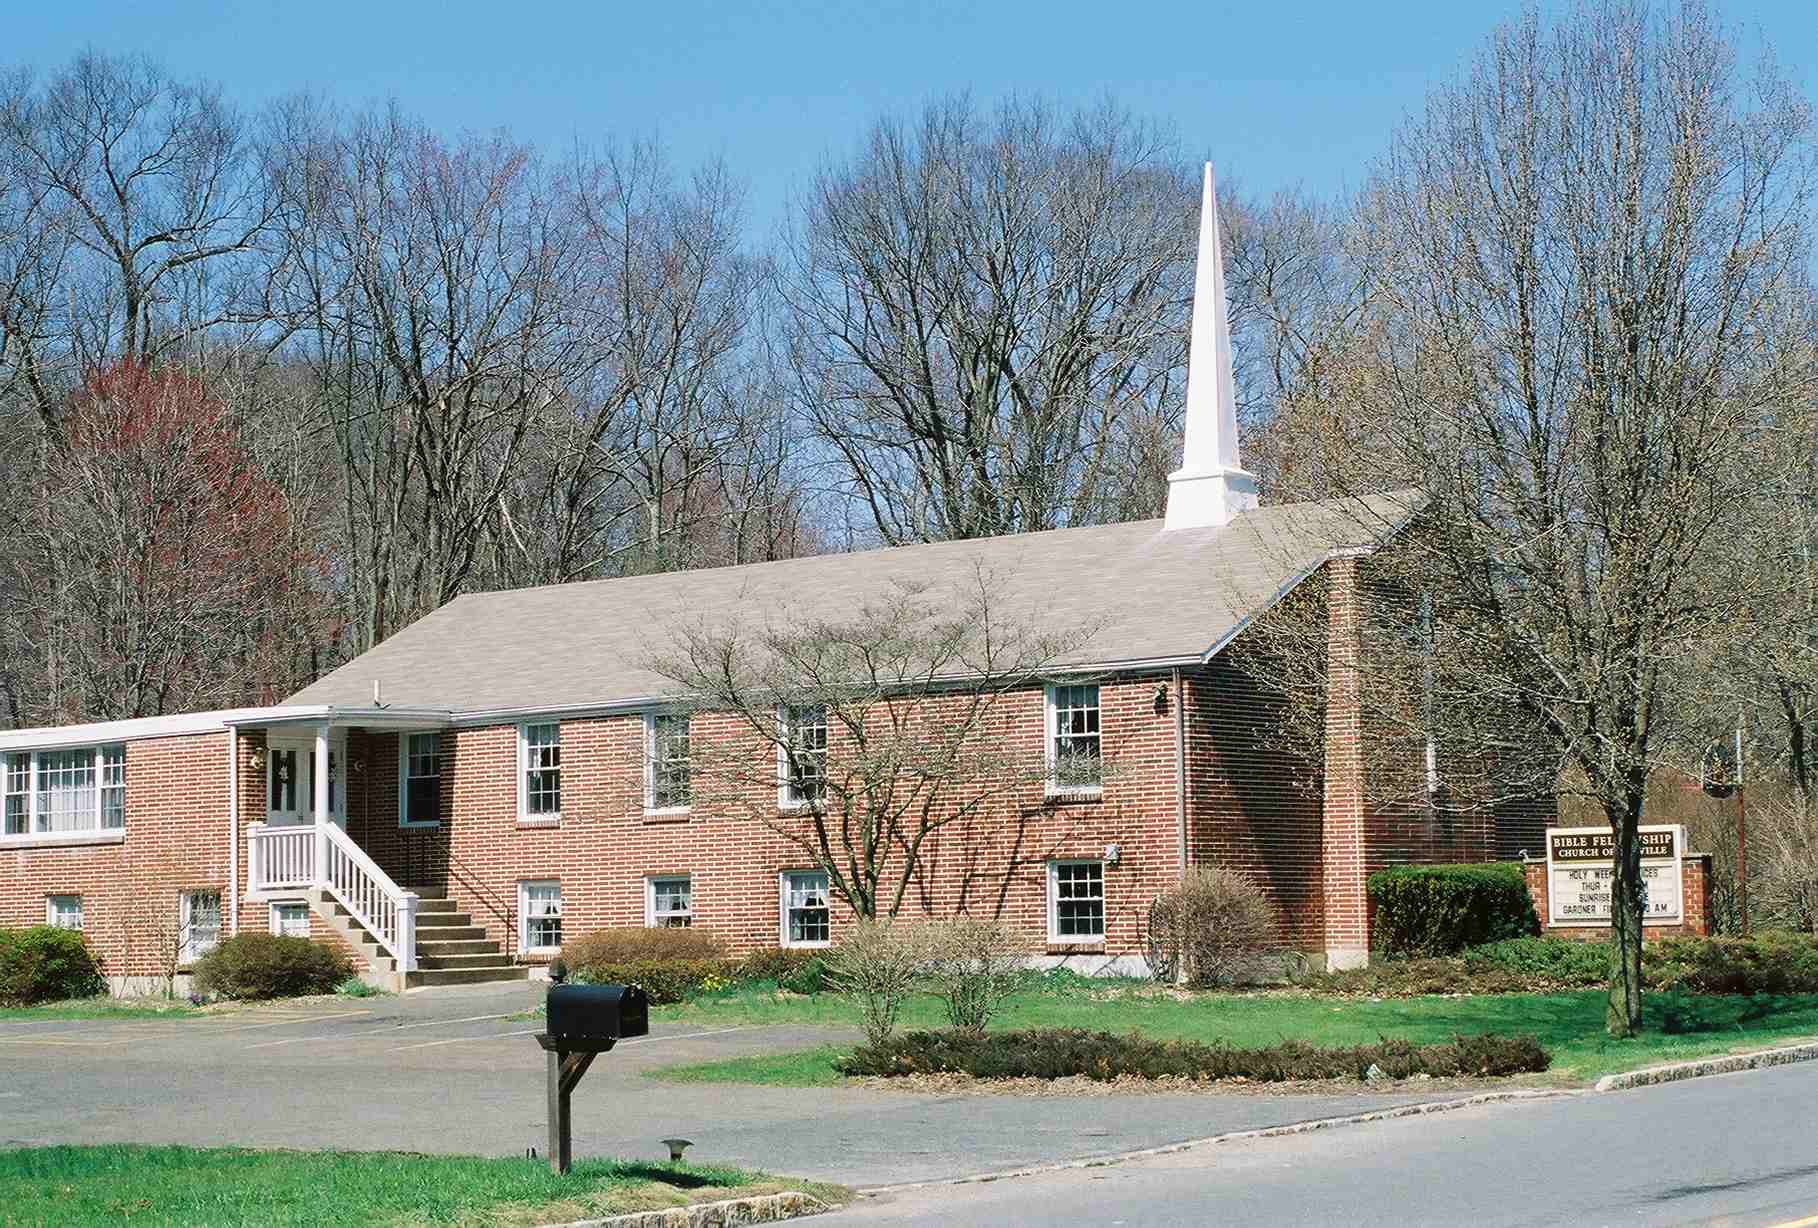 Bible Fellowship Church